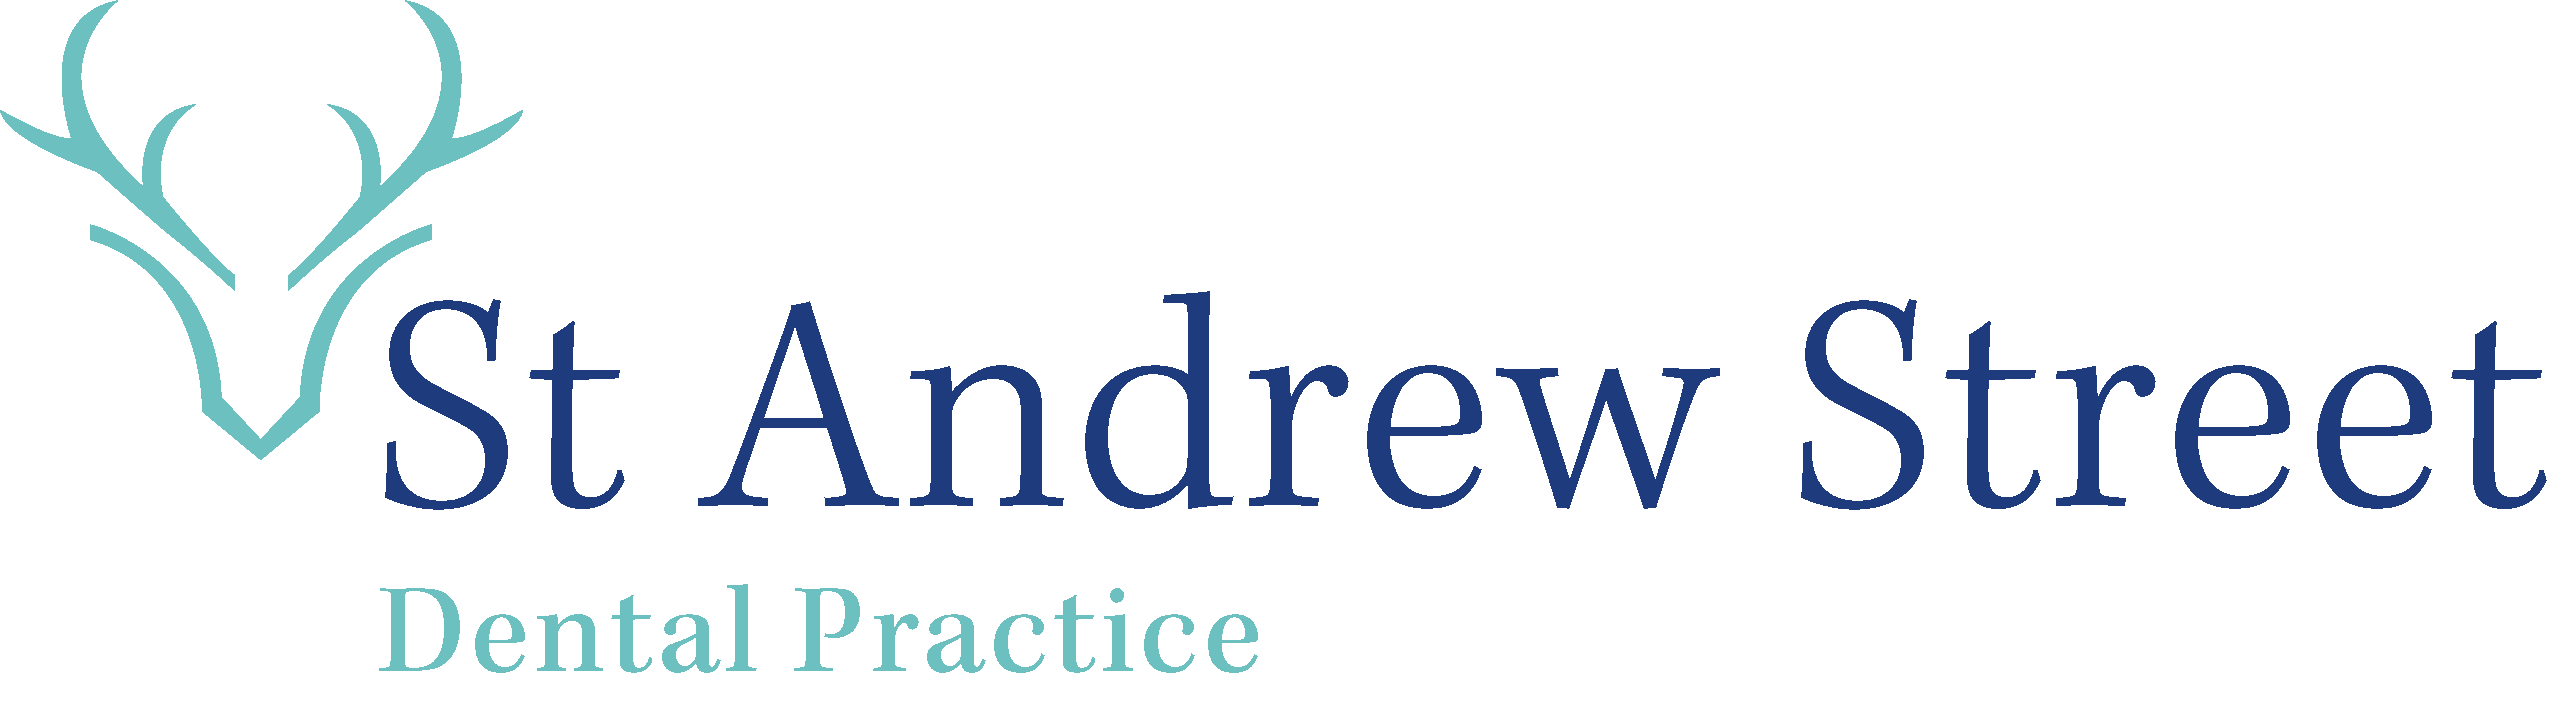 St. Andrew Street Dental Practice